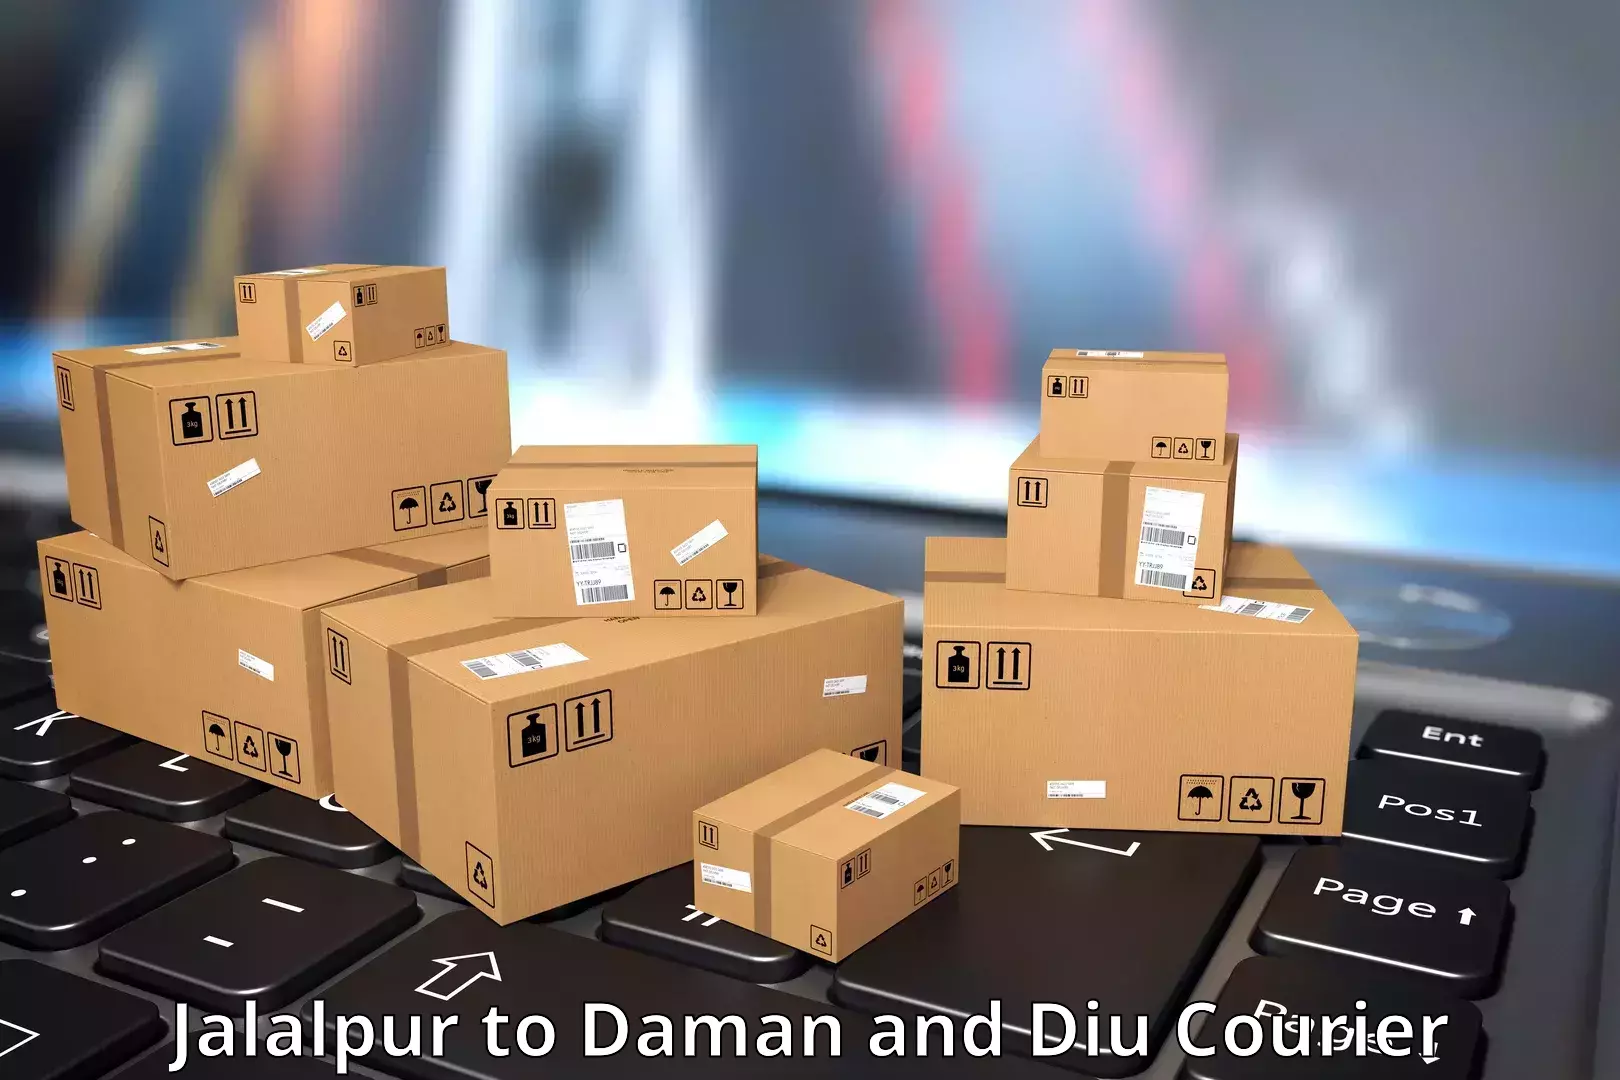 Secure shipping methods Jalalpur to Diu